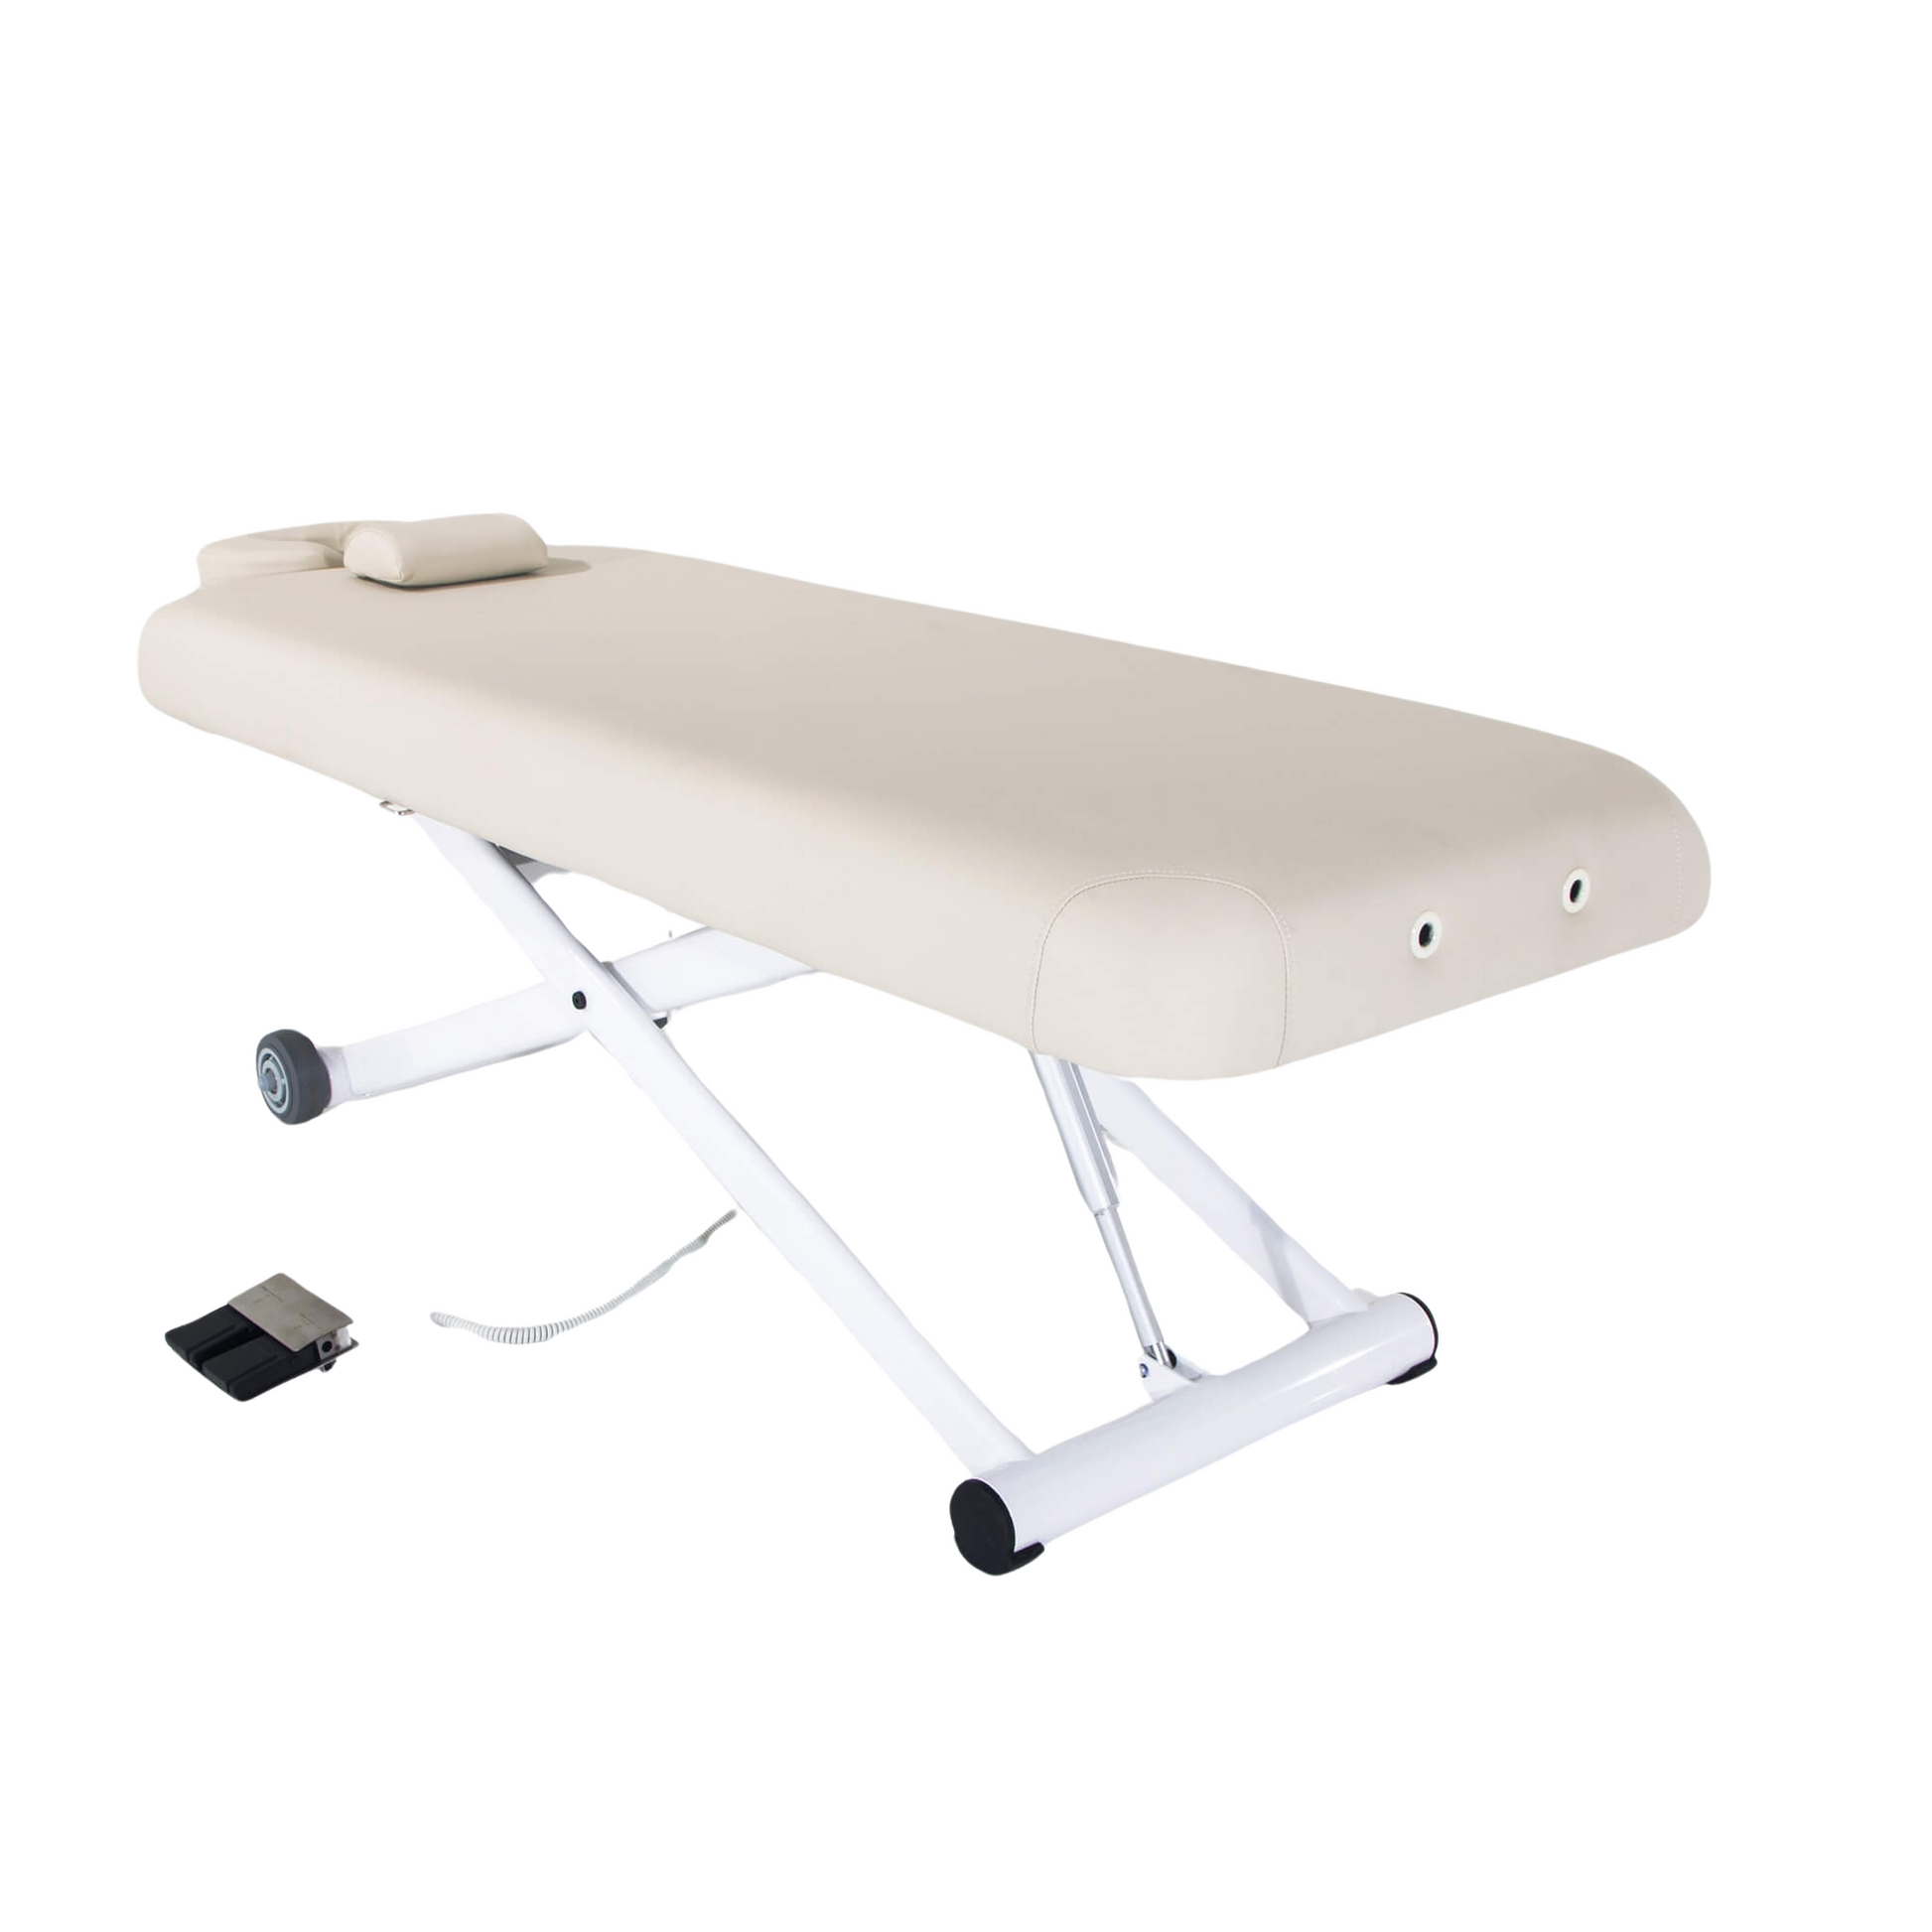 Silverfox 2274 Massage Bed - light beige color